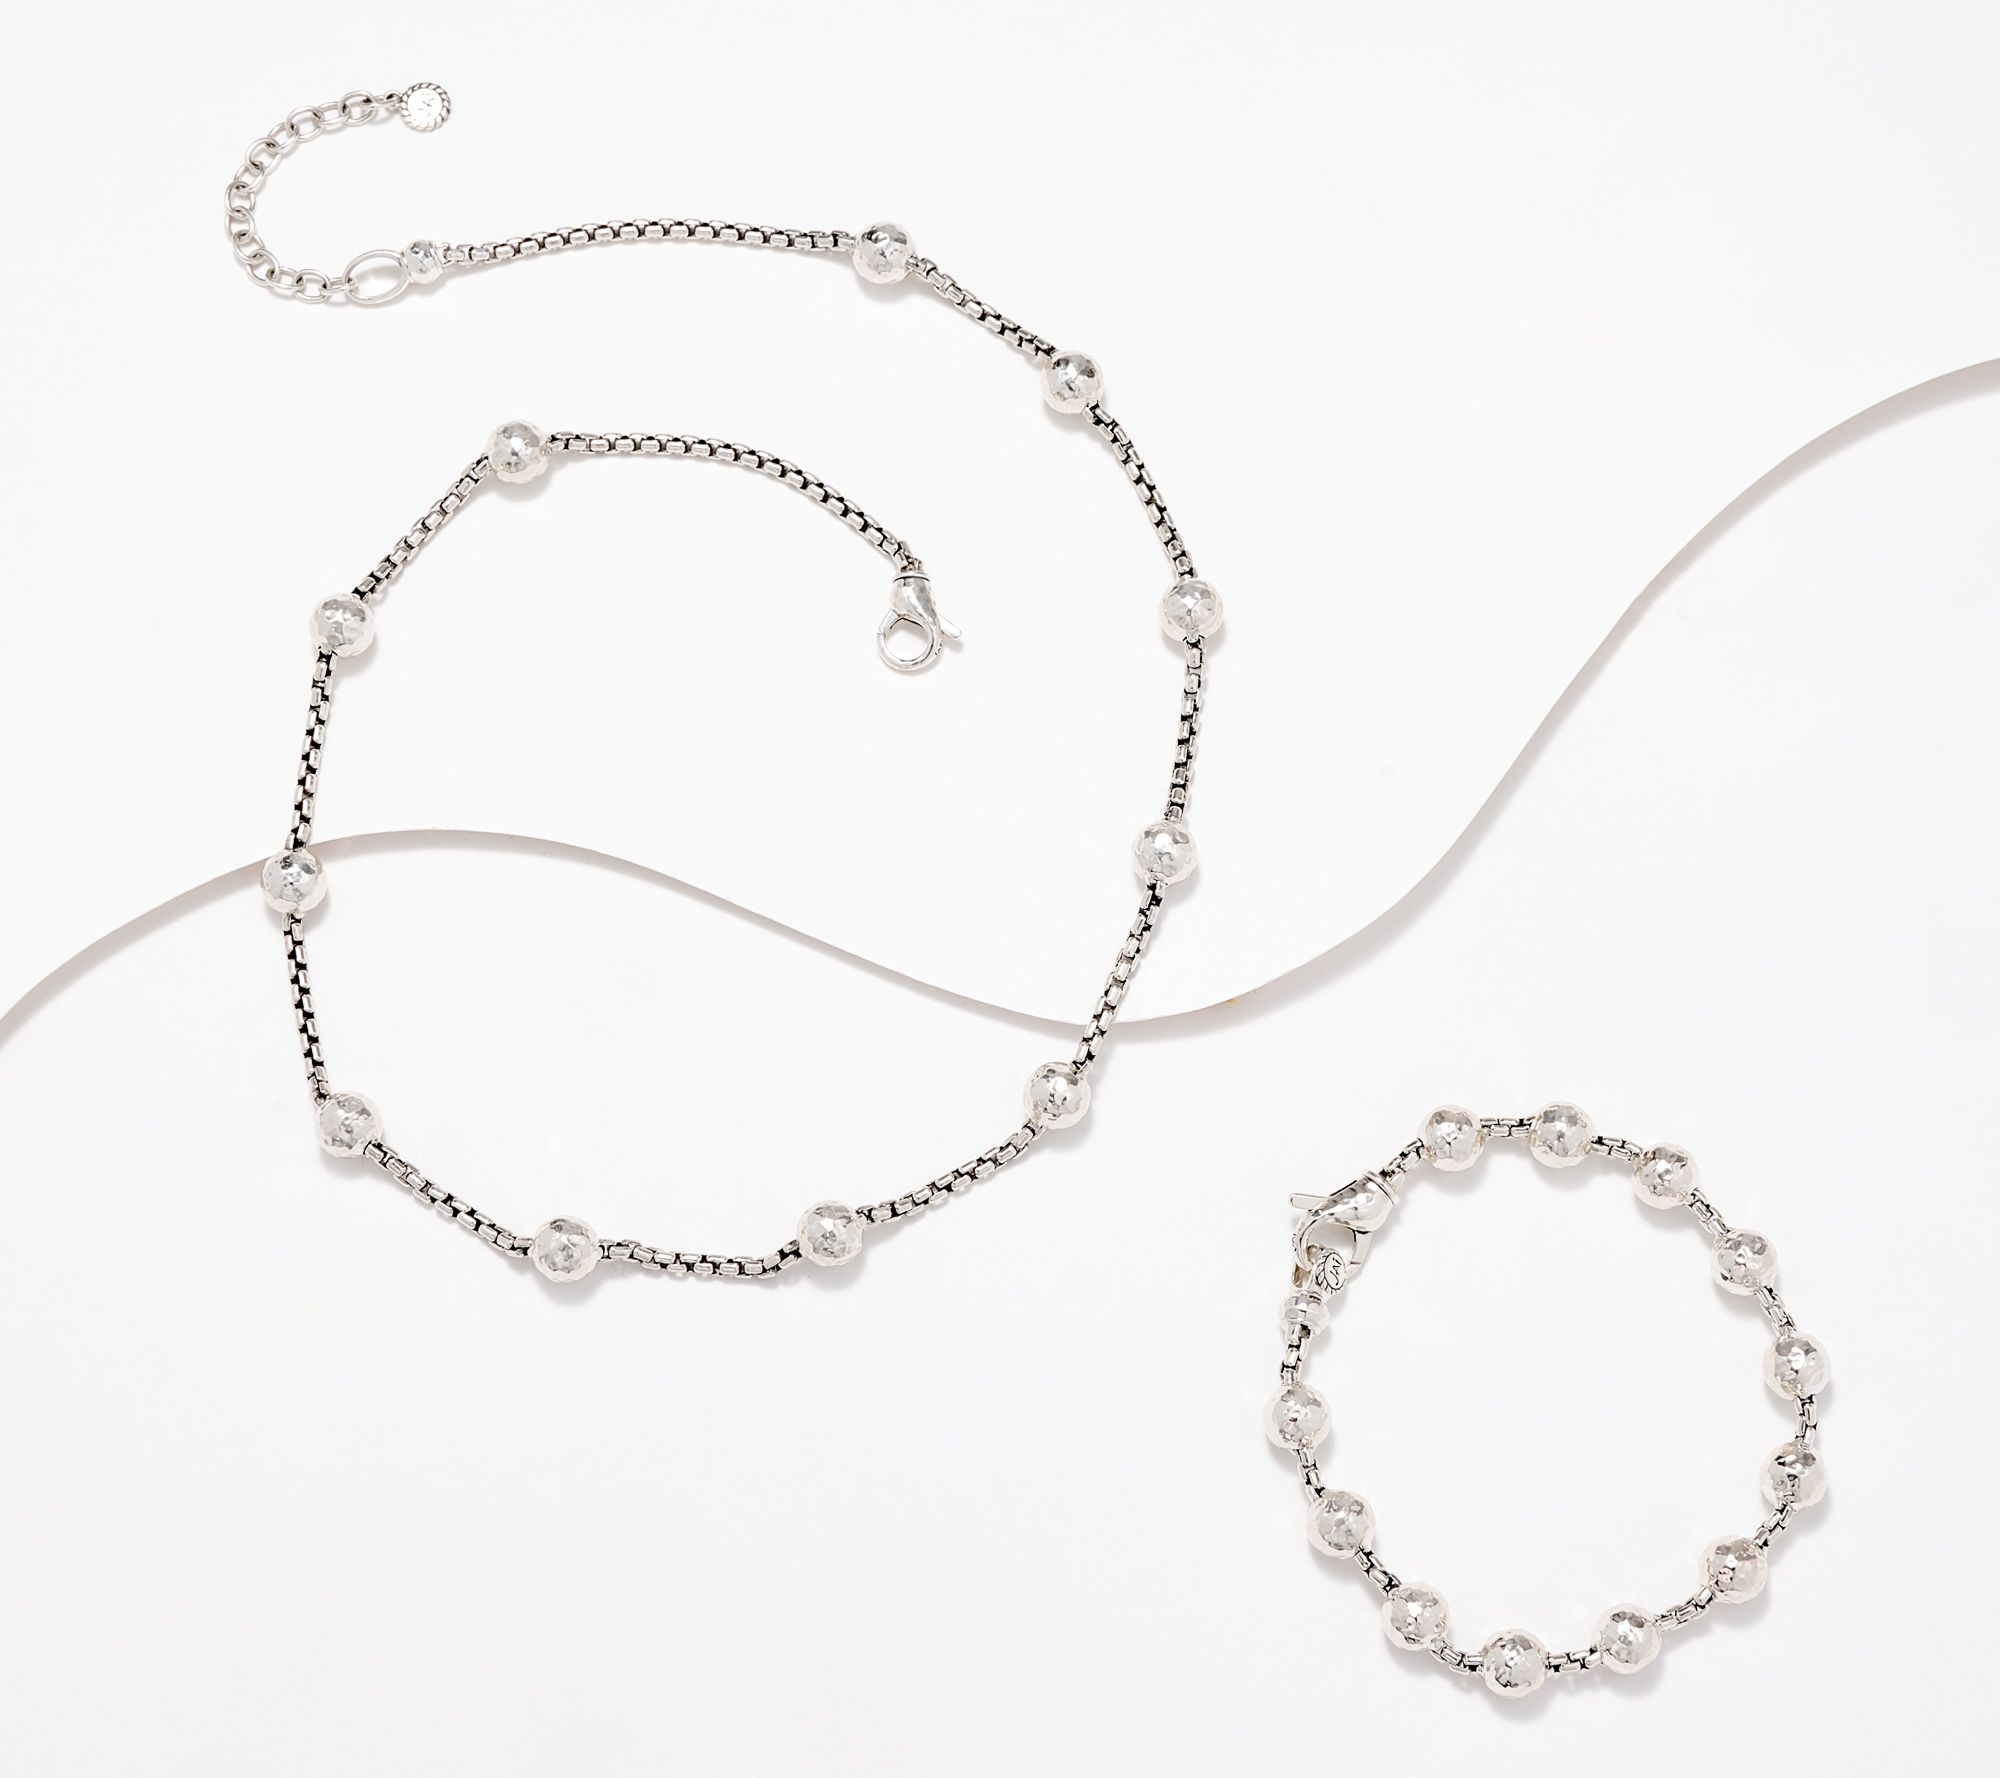 JAI Sterling Silver Hammered Bead Bracelet or Necklace - QVC.com